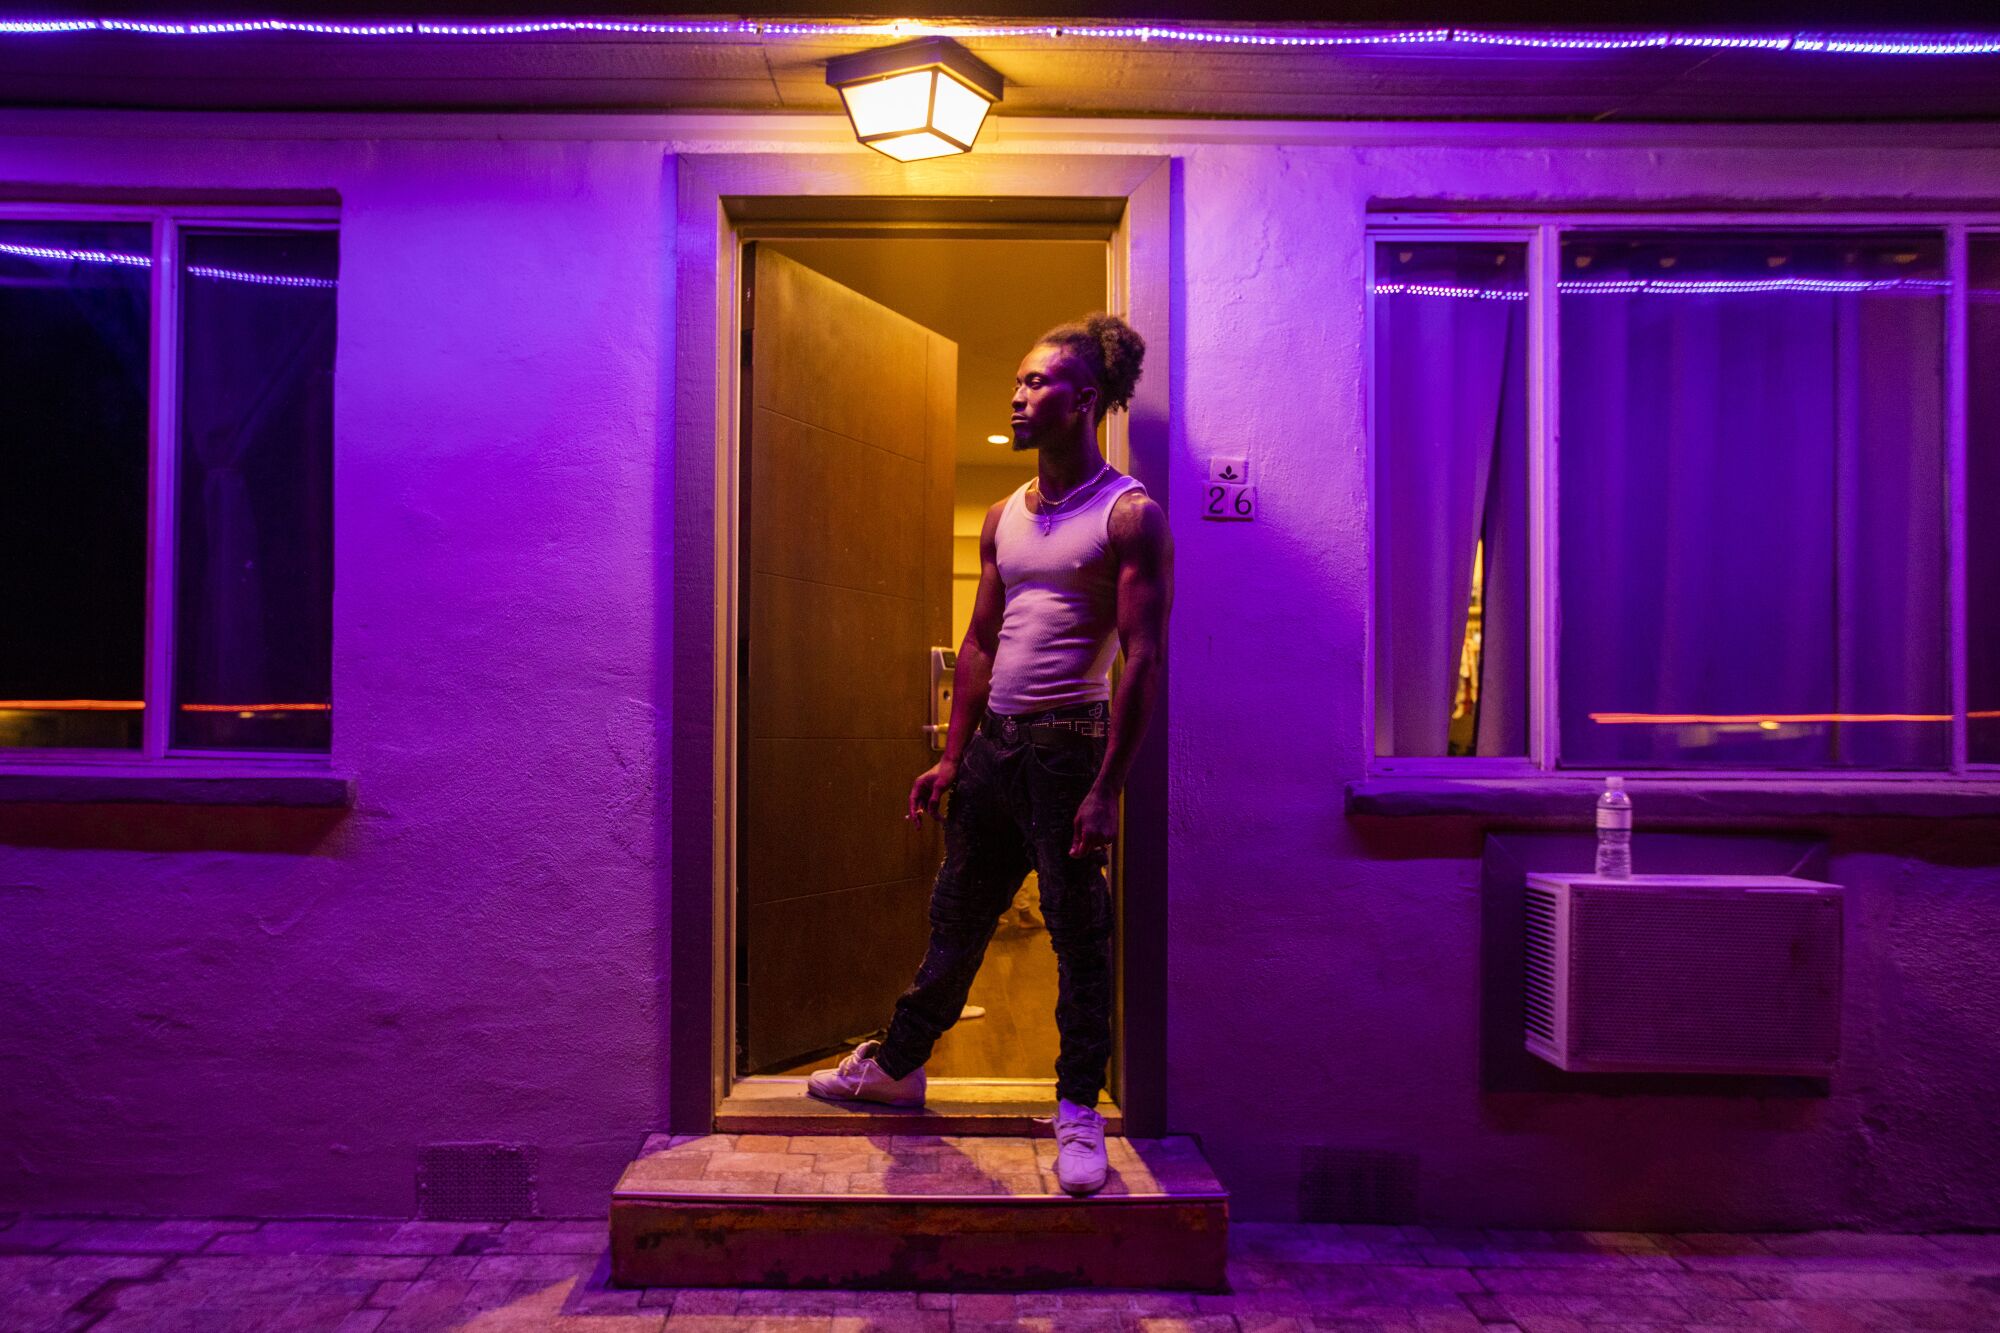 A man stands in a motel room doorway under purple lighting.